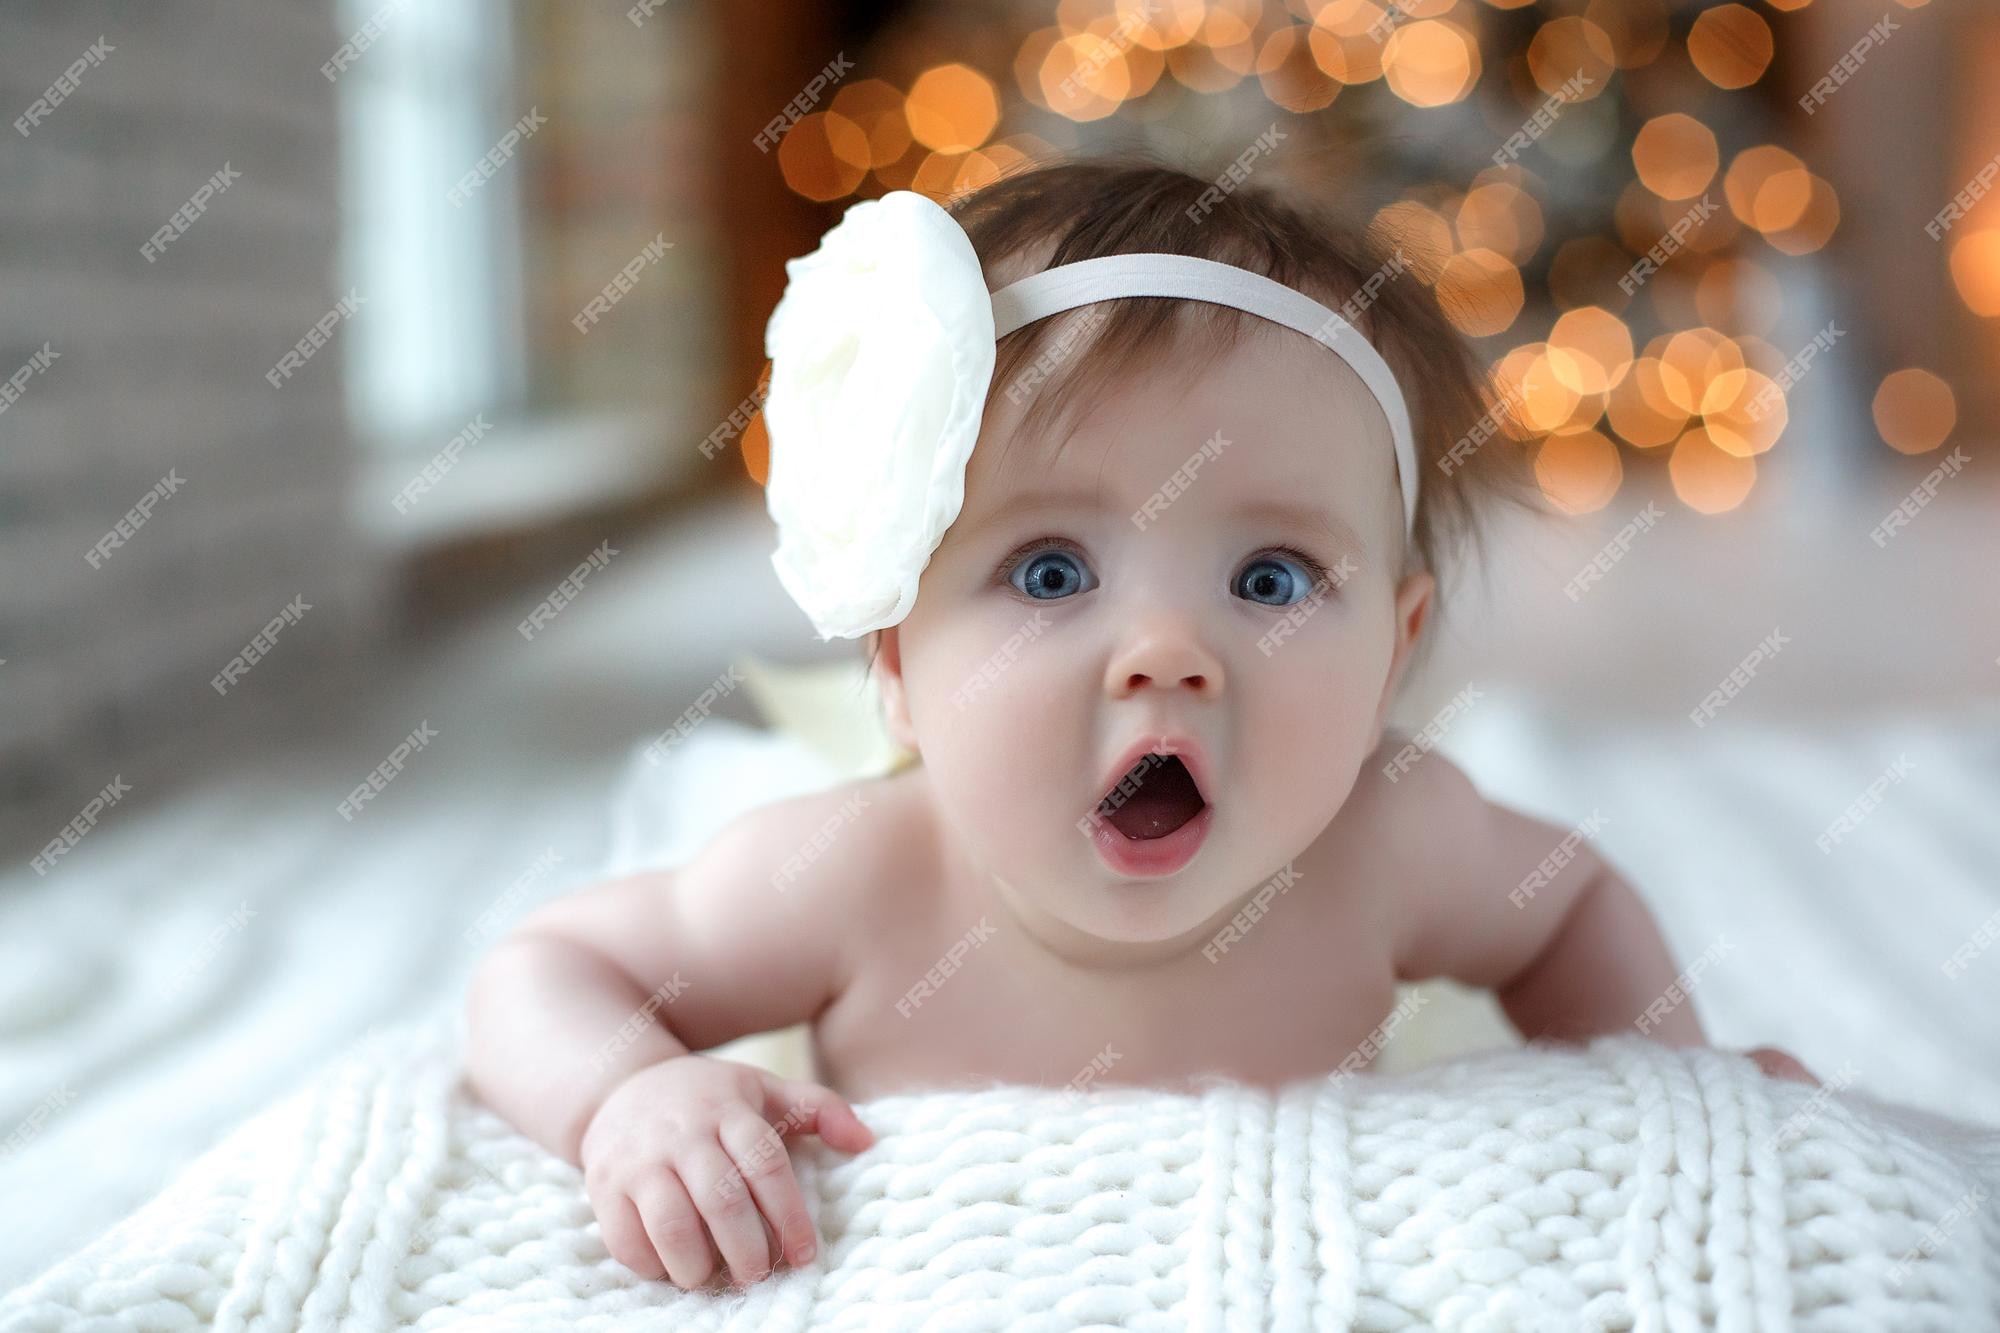 Adorable Baby Images - Free Download on Freepik